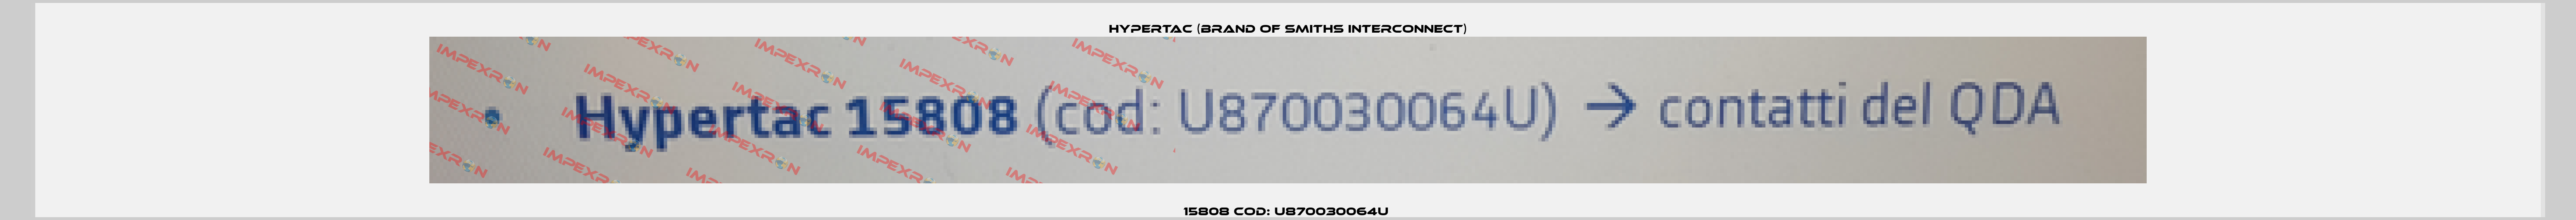 15808 COD: U870030064U  Hypertac (brand of Smiths Interconnect)